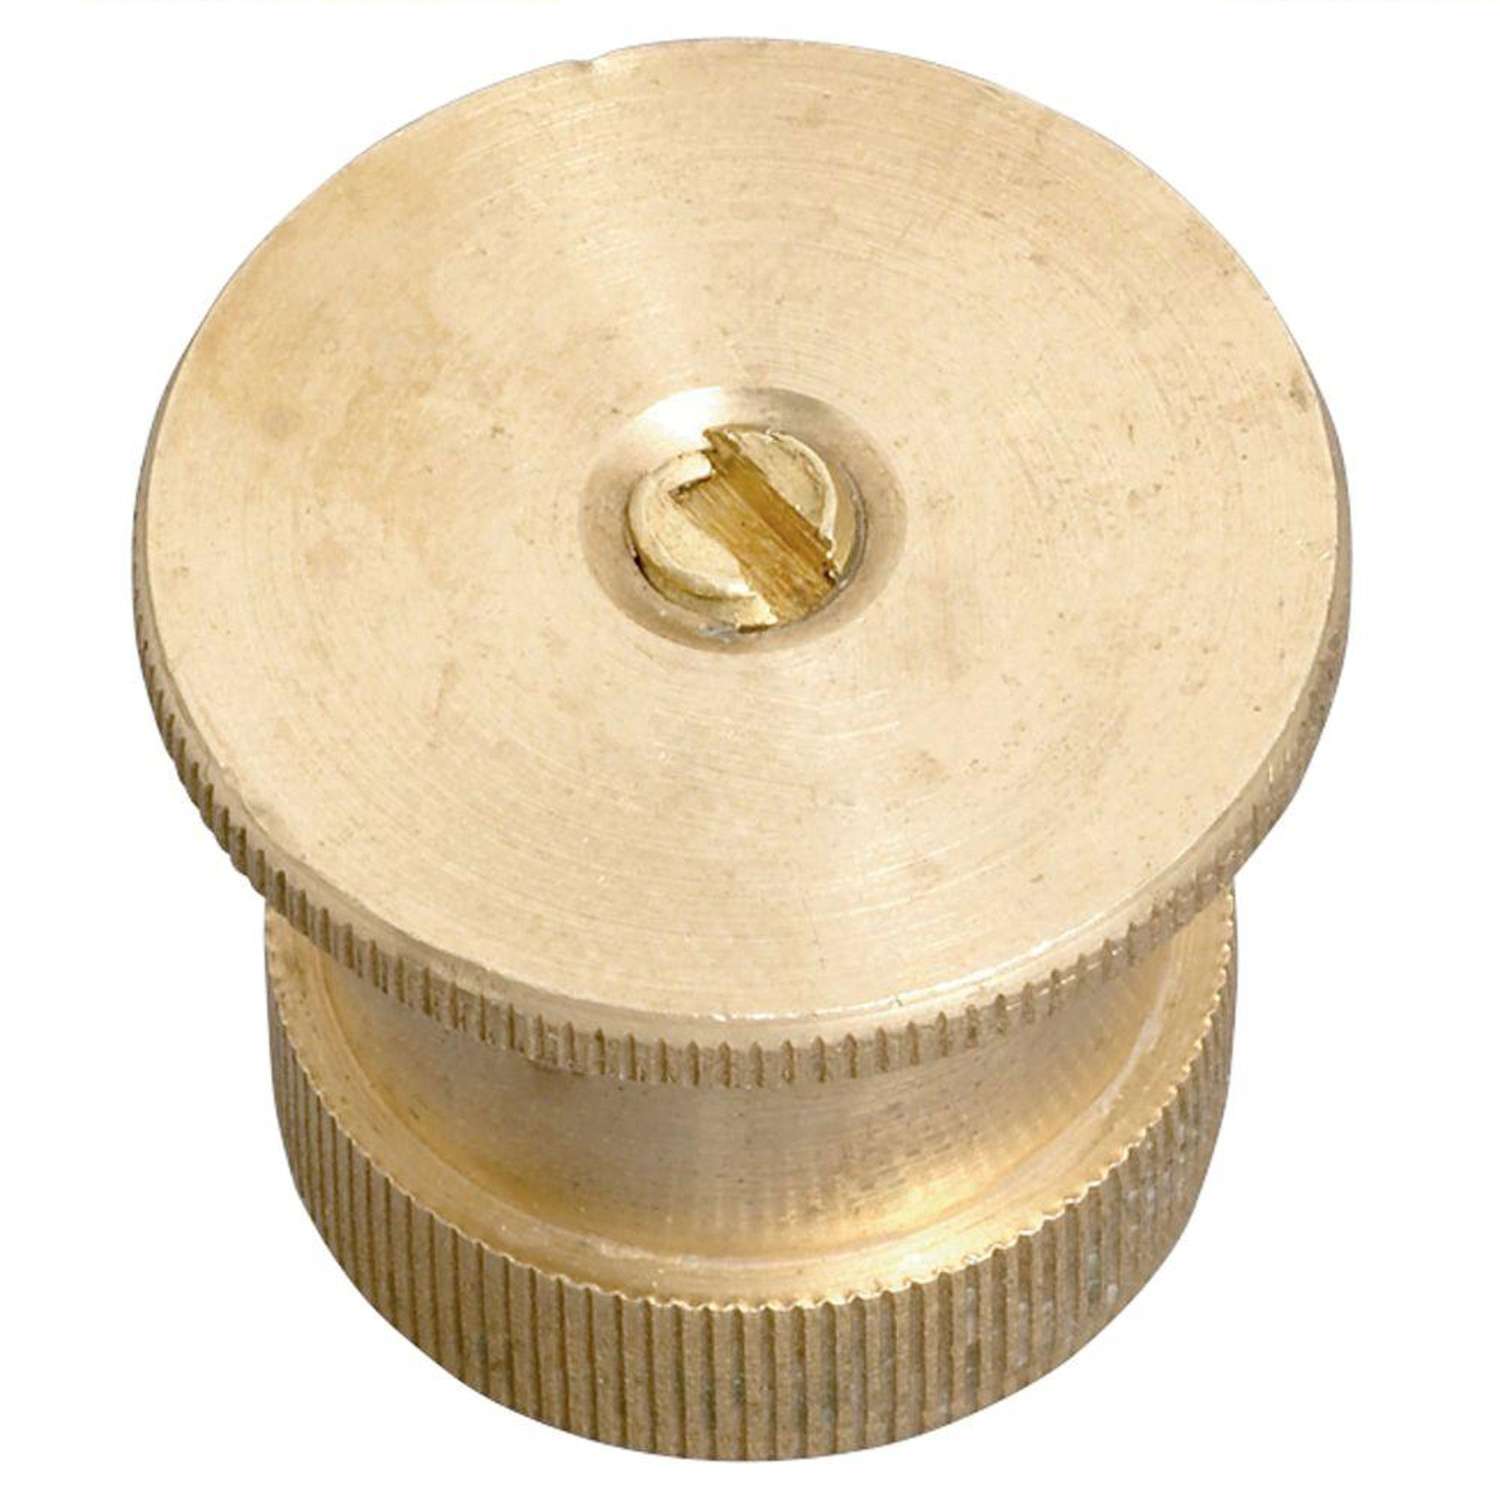 ACE All Metal Heavy-Duty Revolving Sprinkler Brass Adjustable Nozzle 